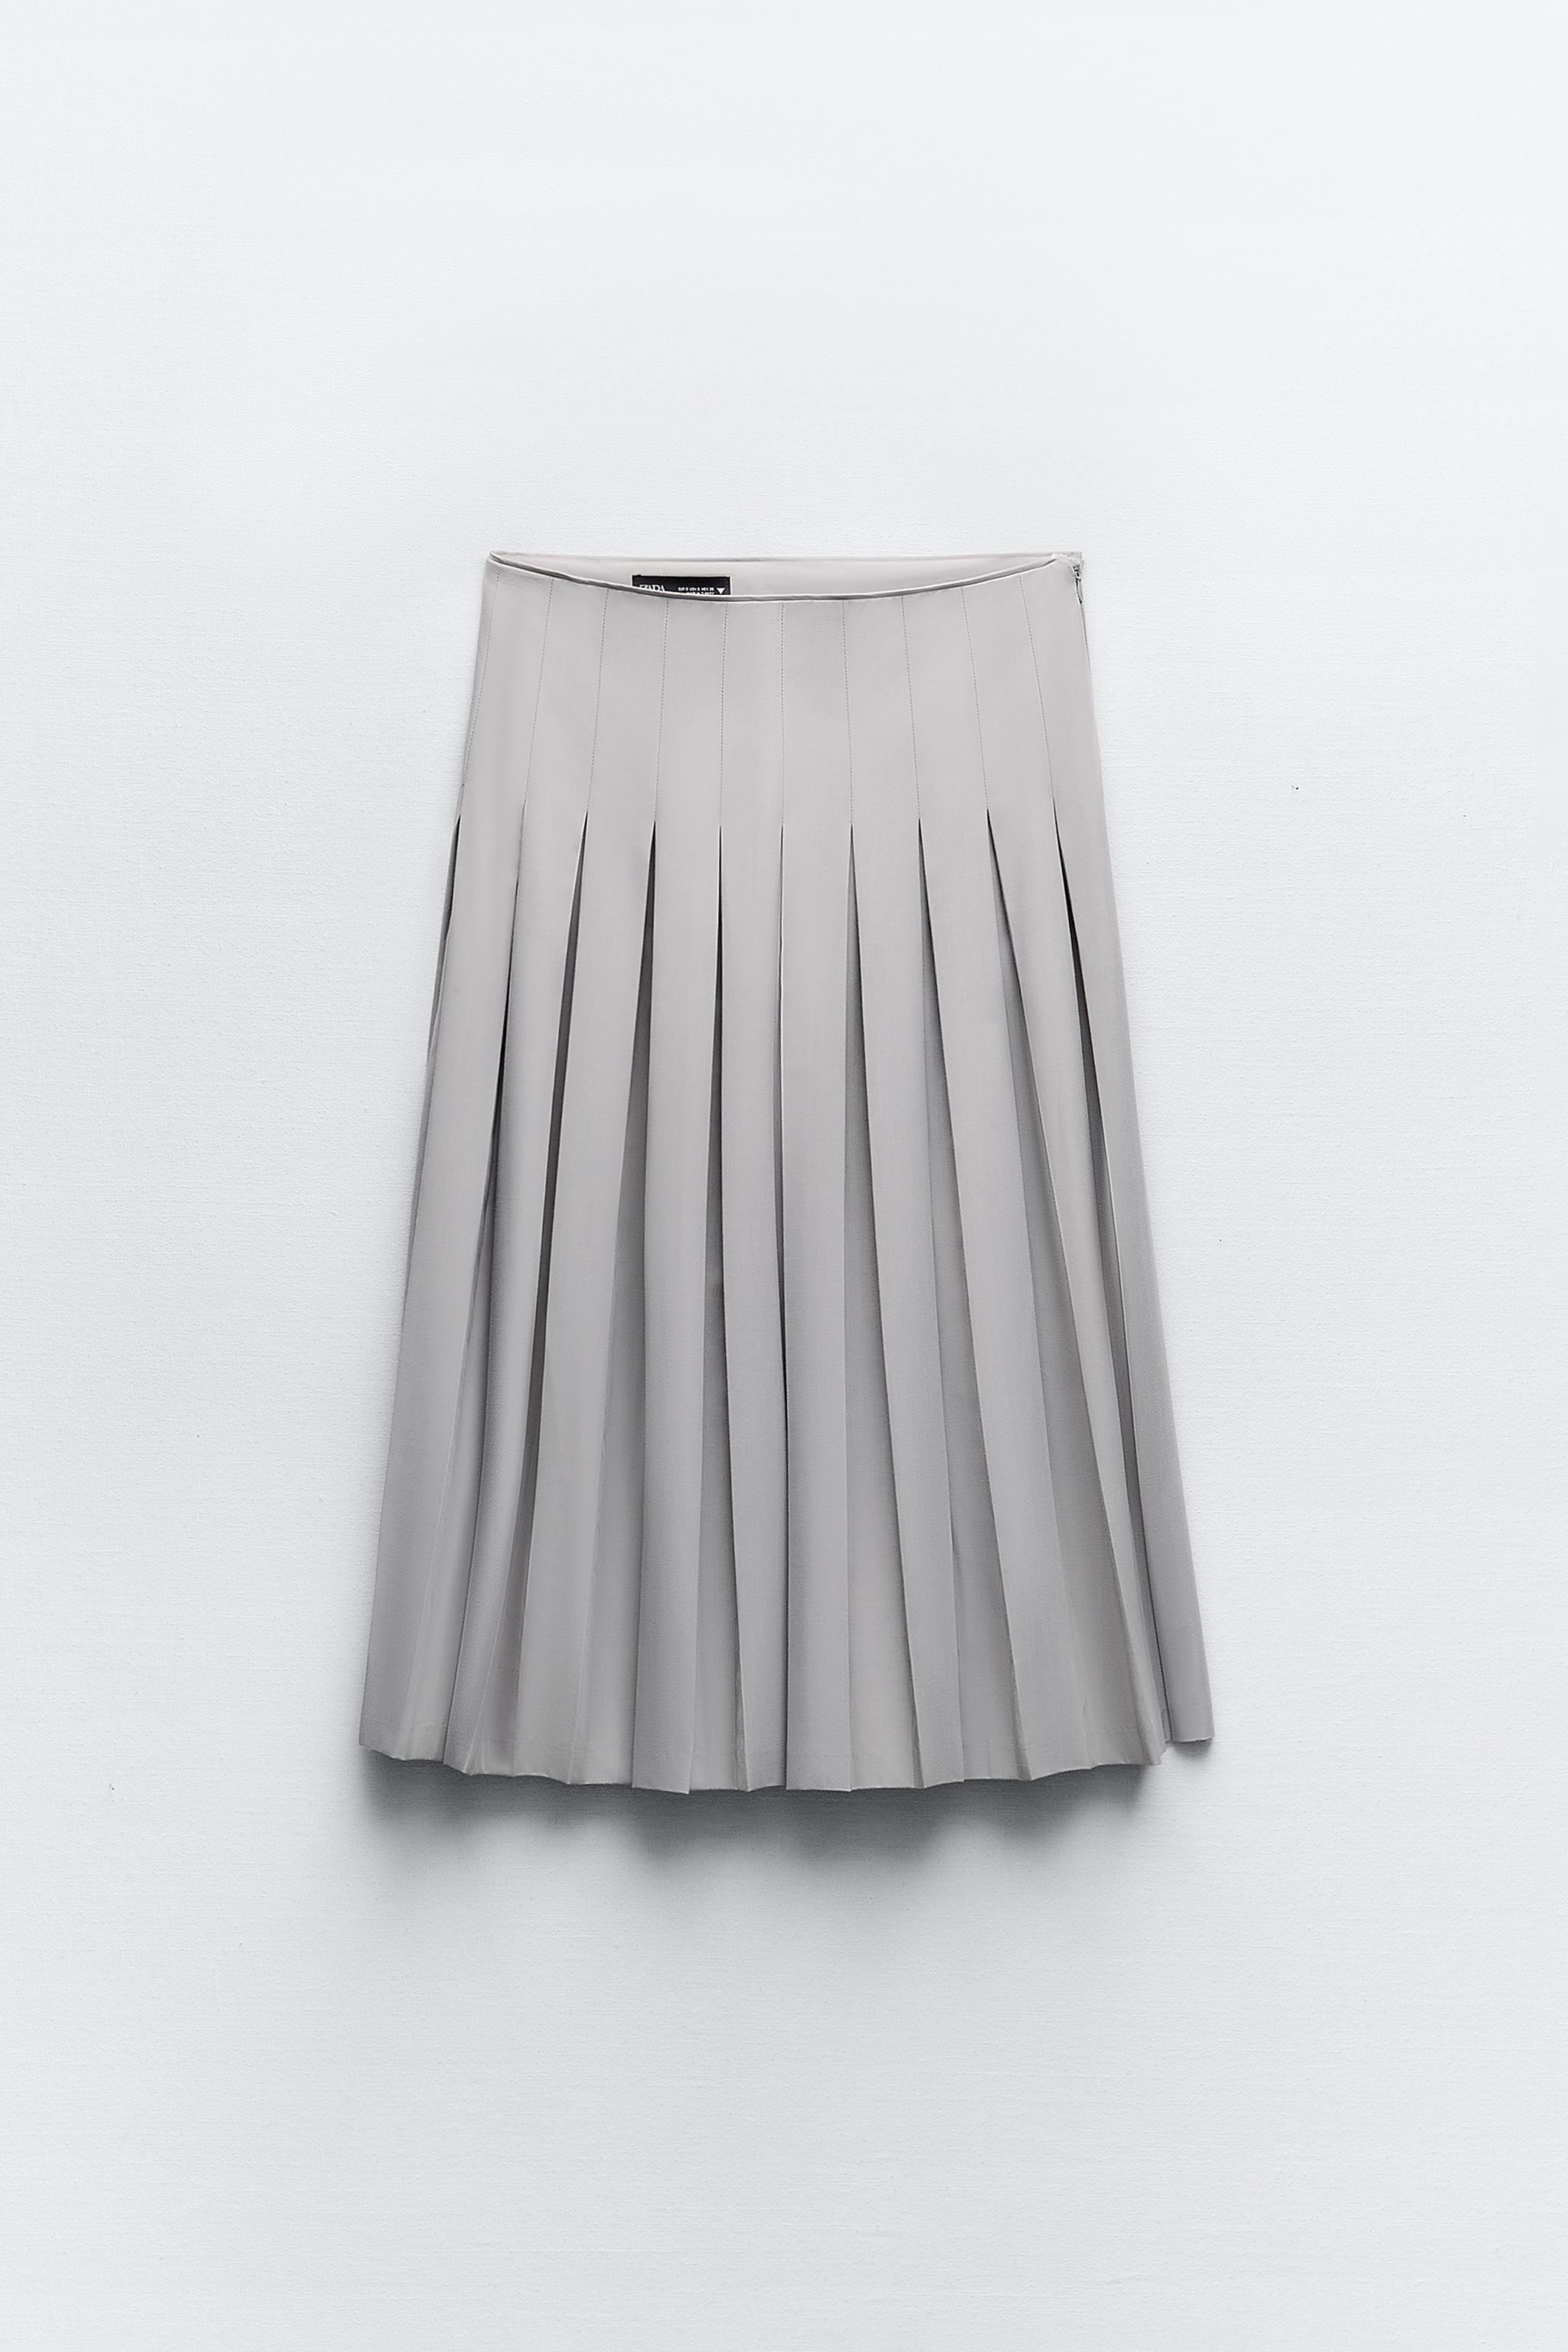 Zara Khaki Multicolored Pleated Midi Skirt Geometric Pattern Size